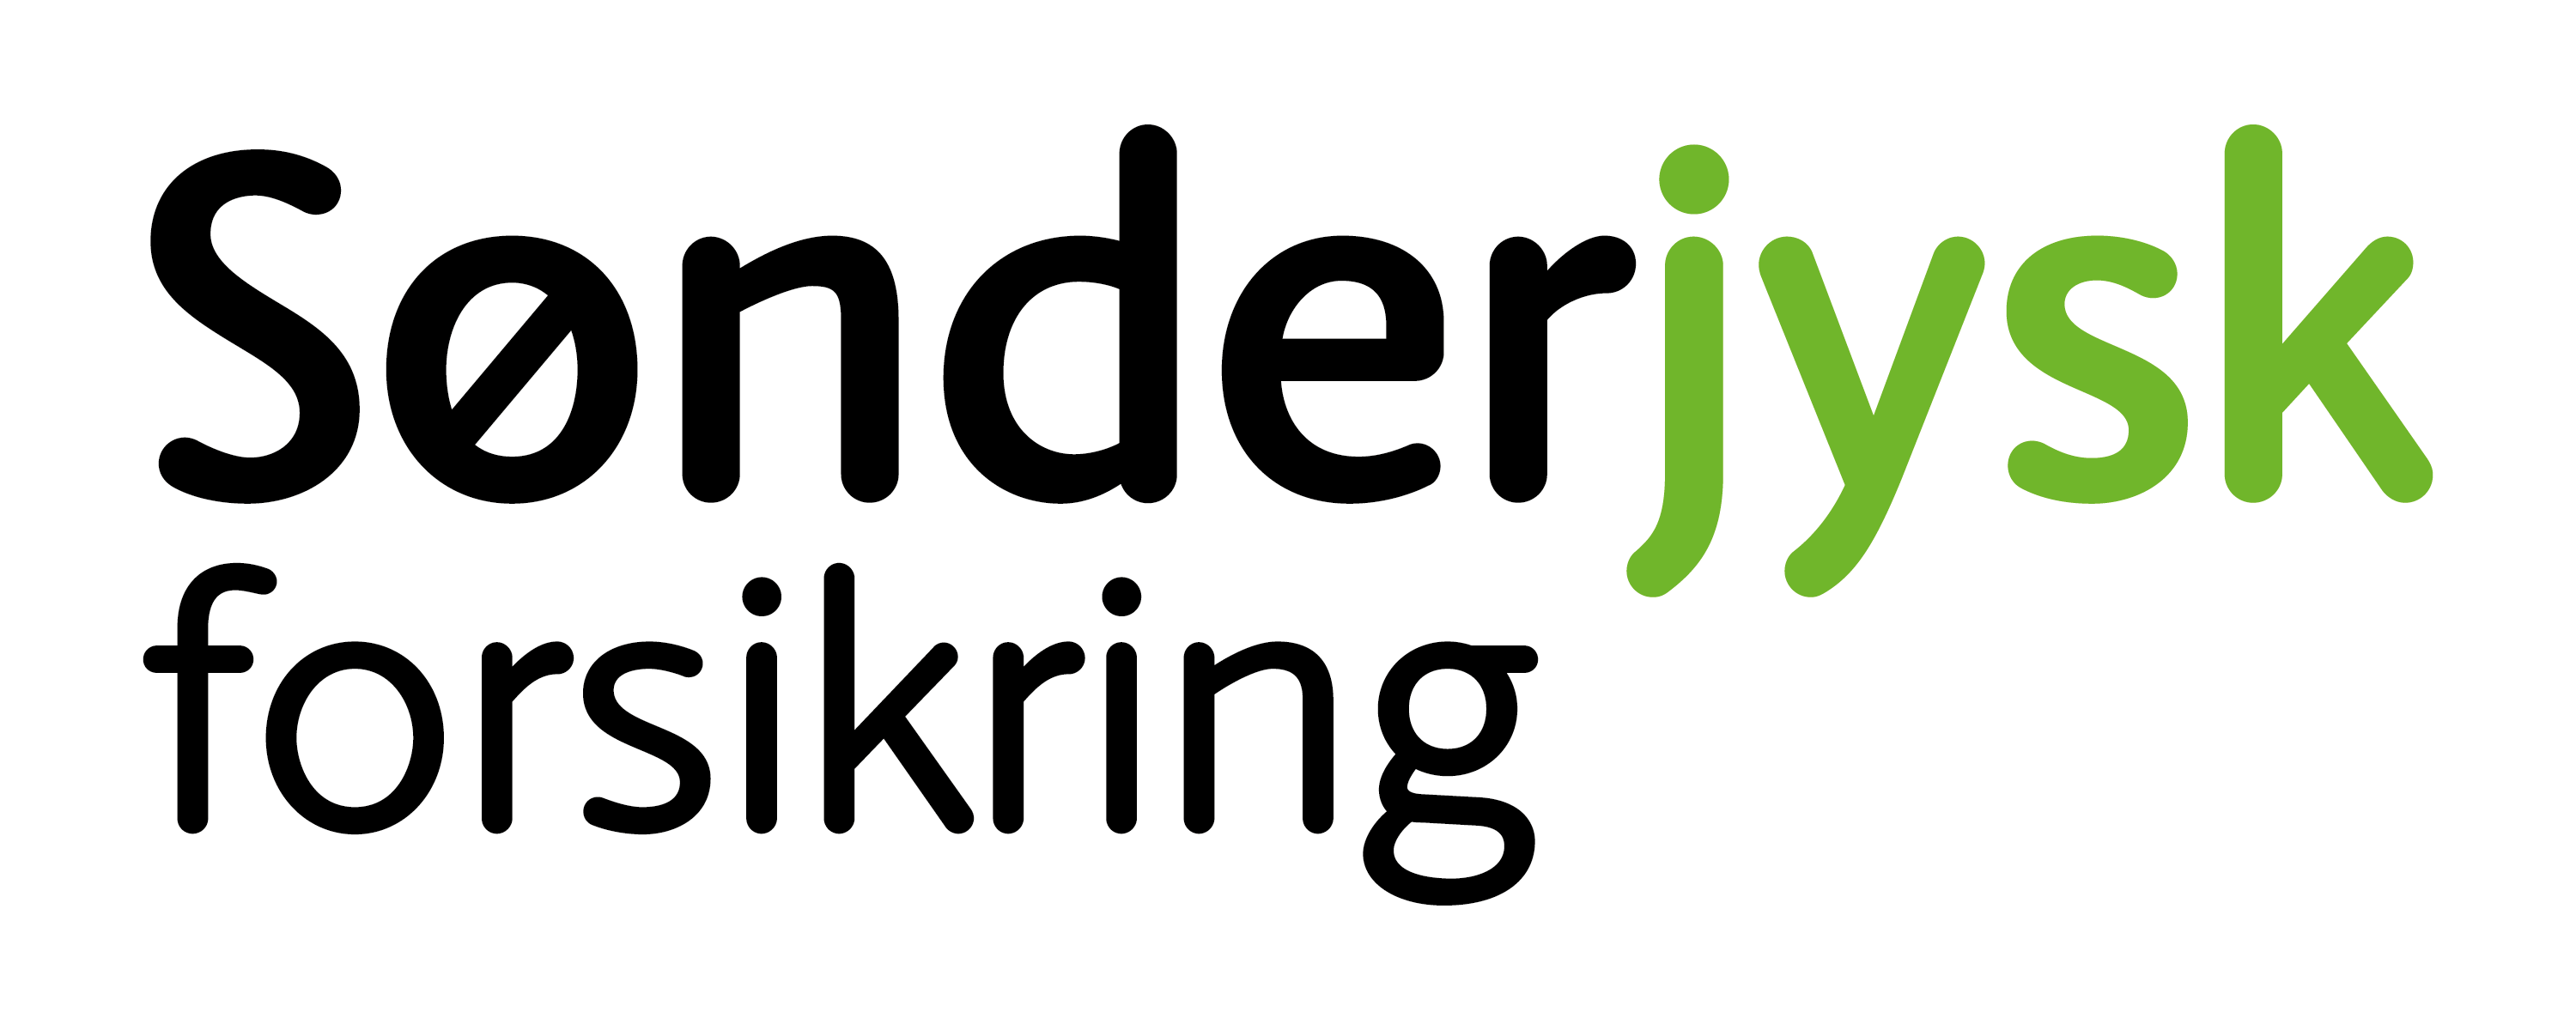 Sønderjysk Forsikring_Logo_I boks_Mindre boks, uden mølle og federe tekst_Sort og grøn_RGB